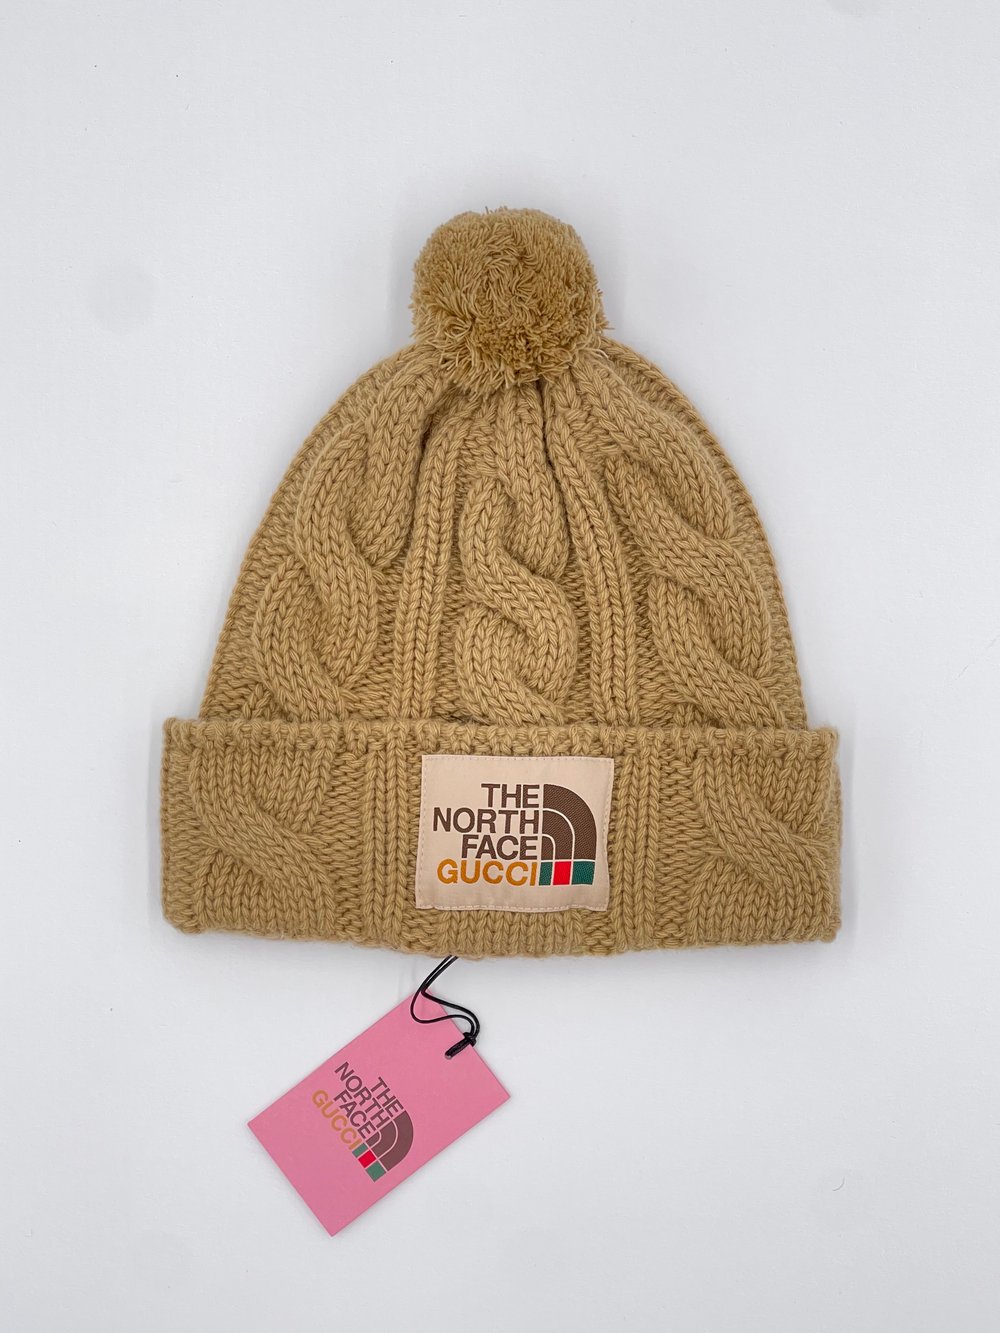 Gucci x The North Face knit beanie | ADKILLAINK